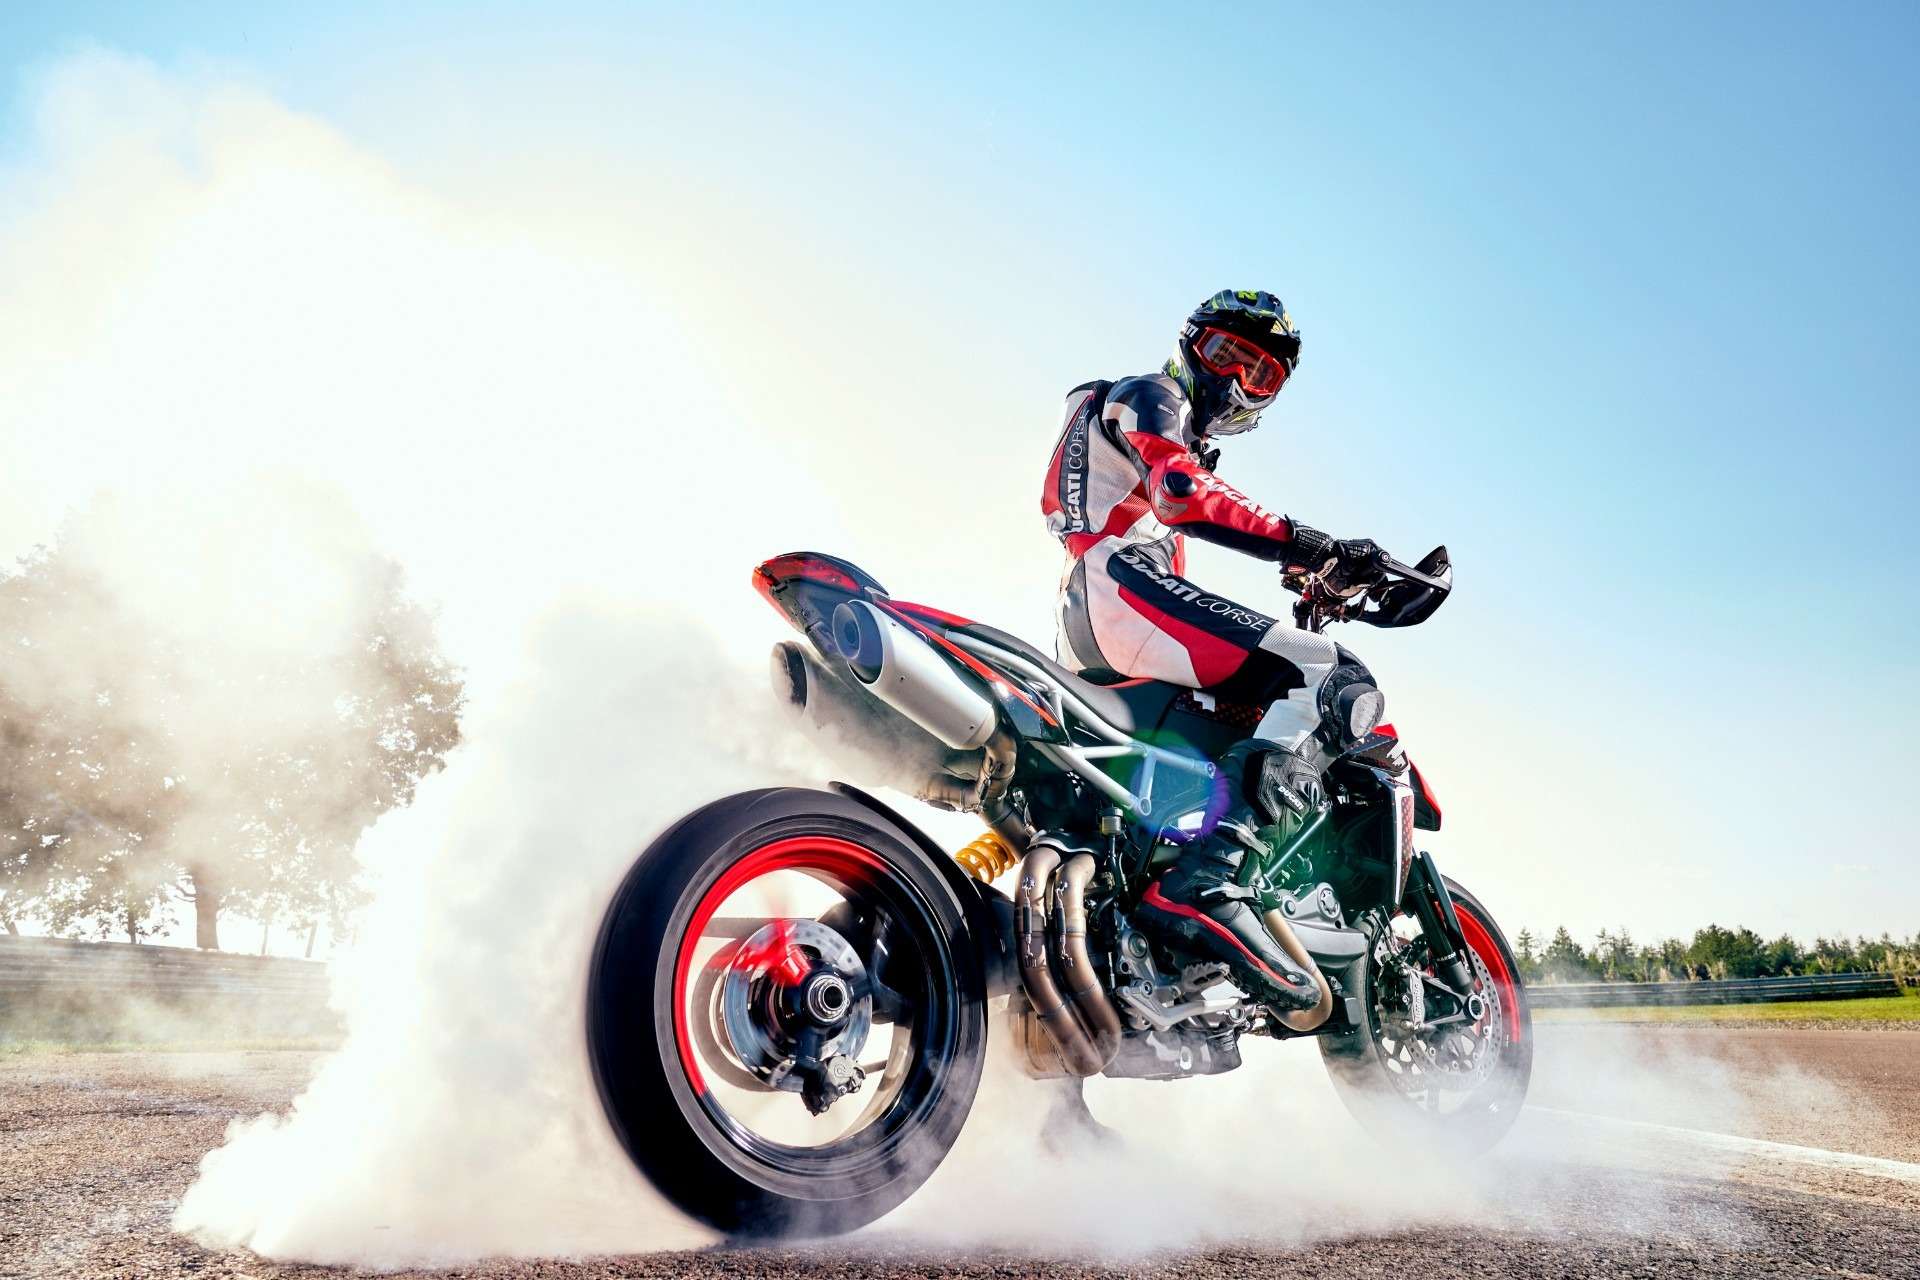 Ducati показала мотоцикл Hypermotard в варианте 950 RVE - фото 1141067